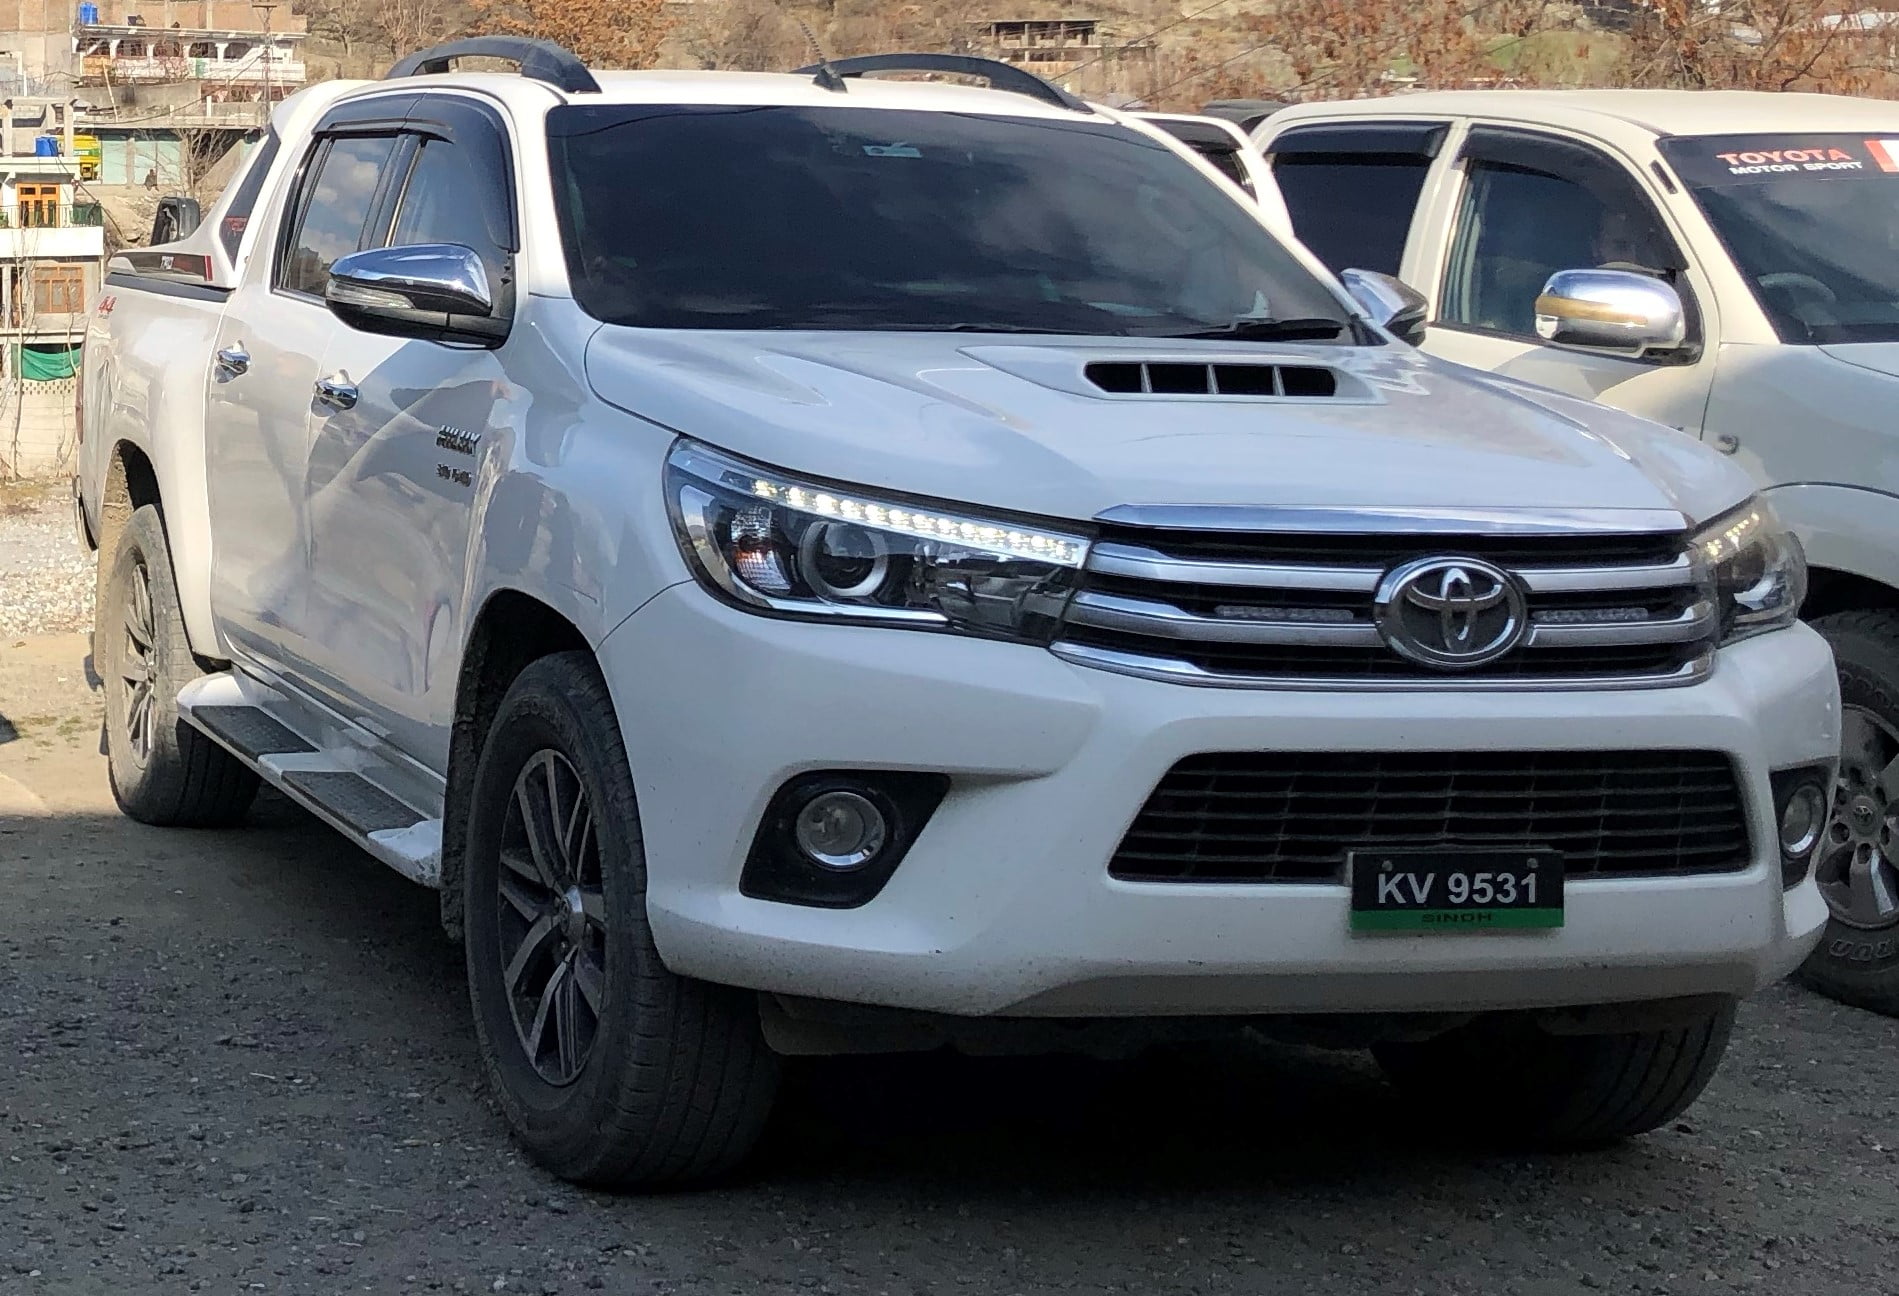 Toyota hilux pakistan